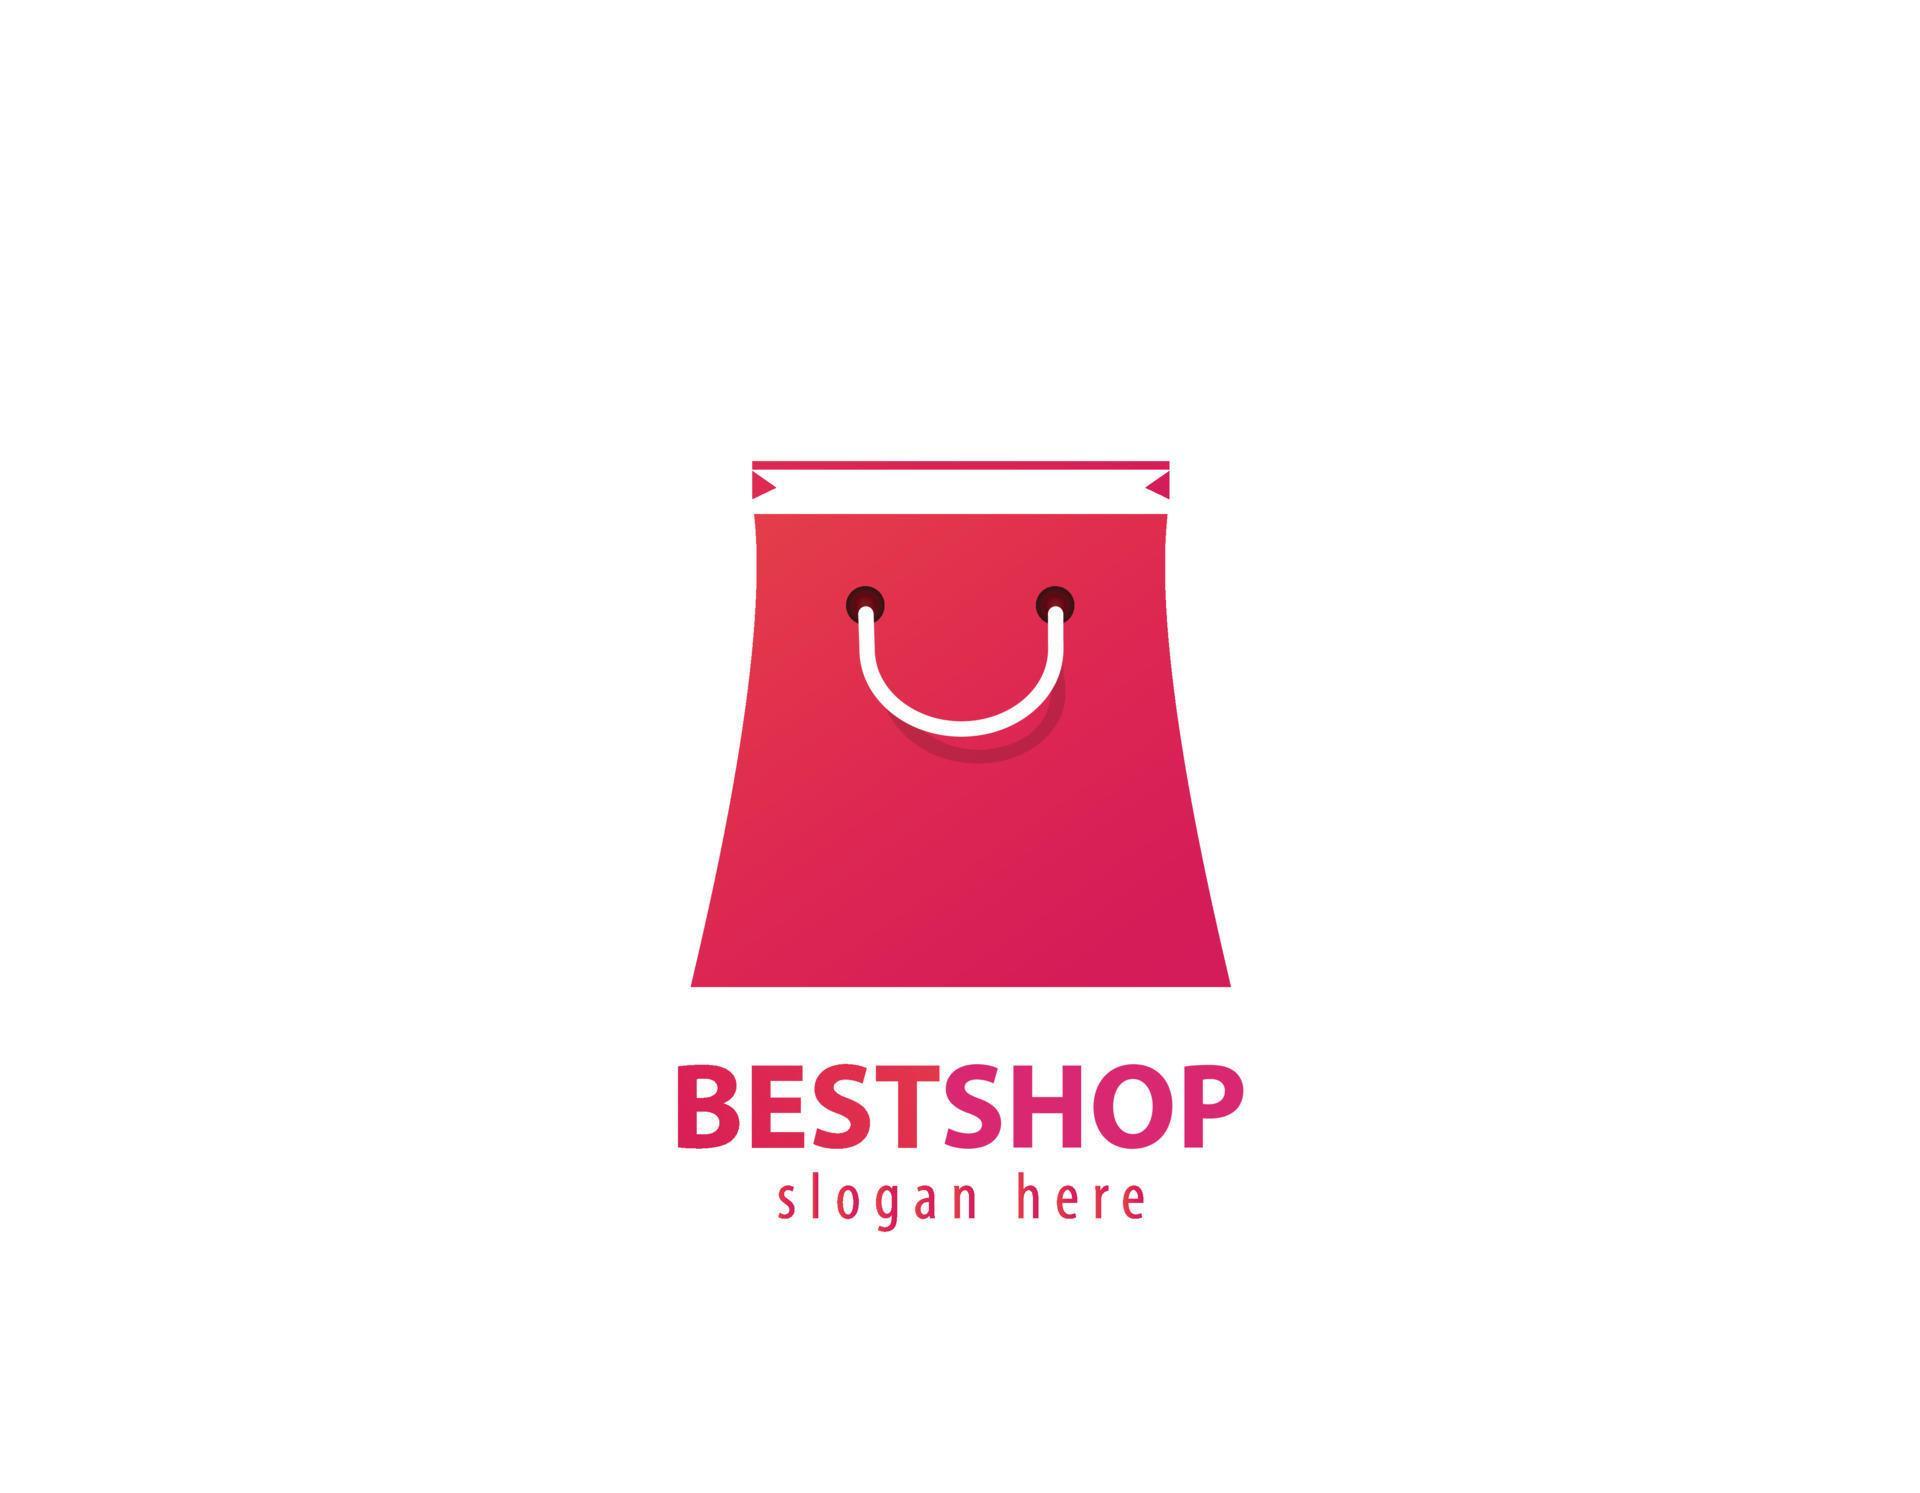 Best shop logo 8488899 Vector Art at Vecteezy